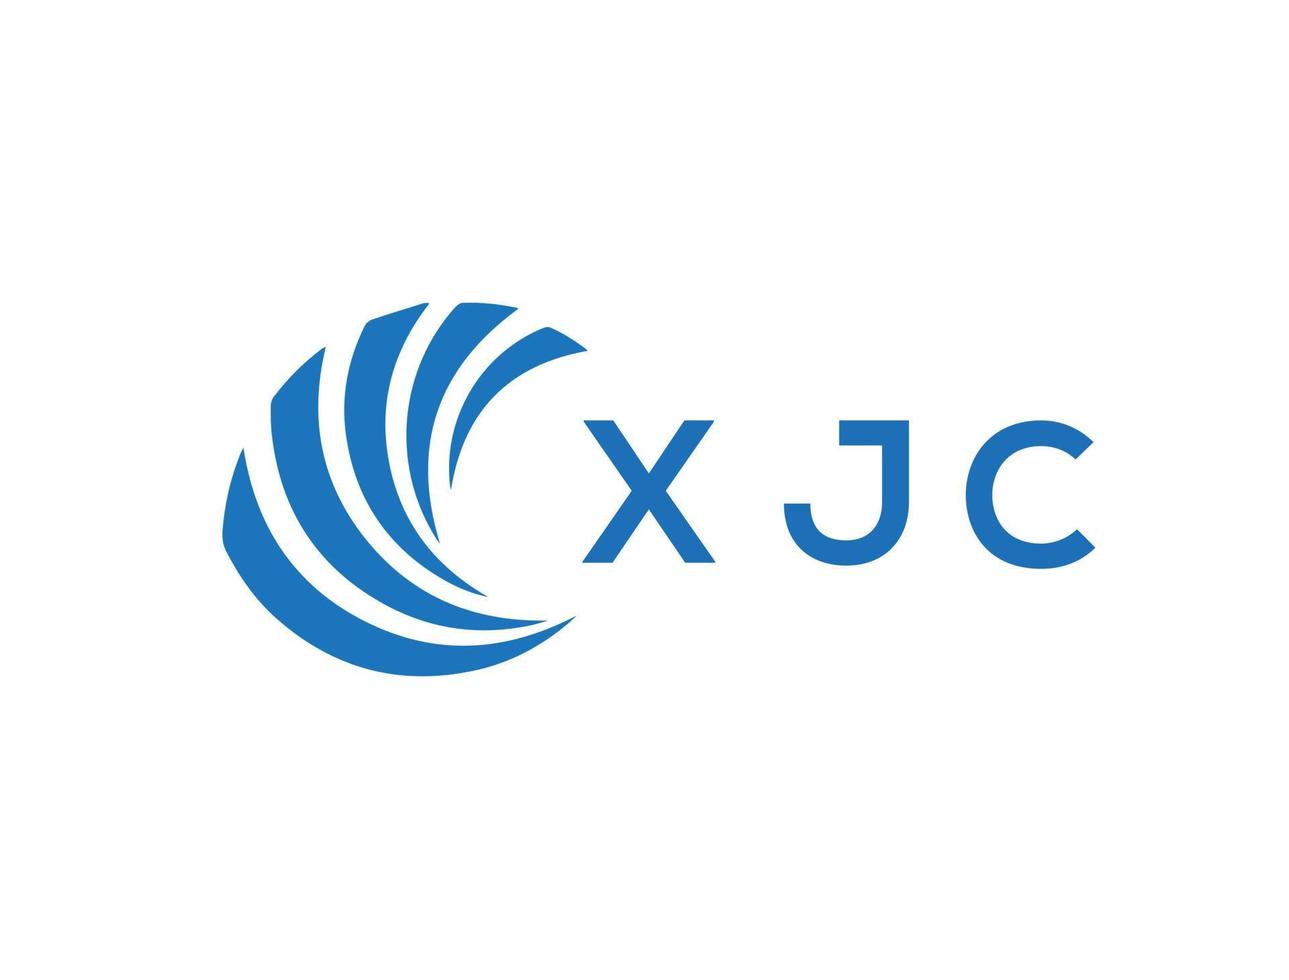 xjc brief logo ontwerp Aan wit achtergrond. xjc creatief cirkel brief logo concept. xjc brief ontwerp. vector